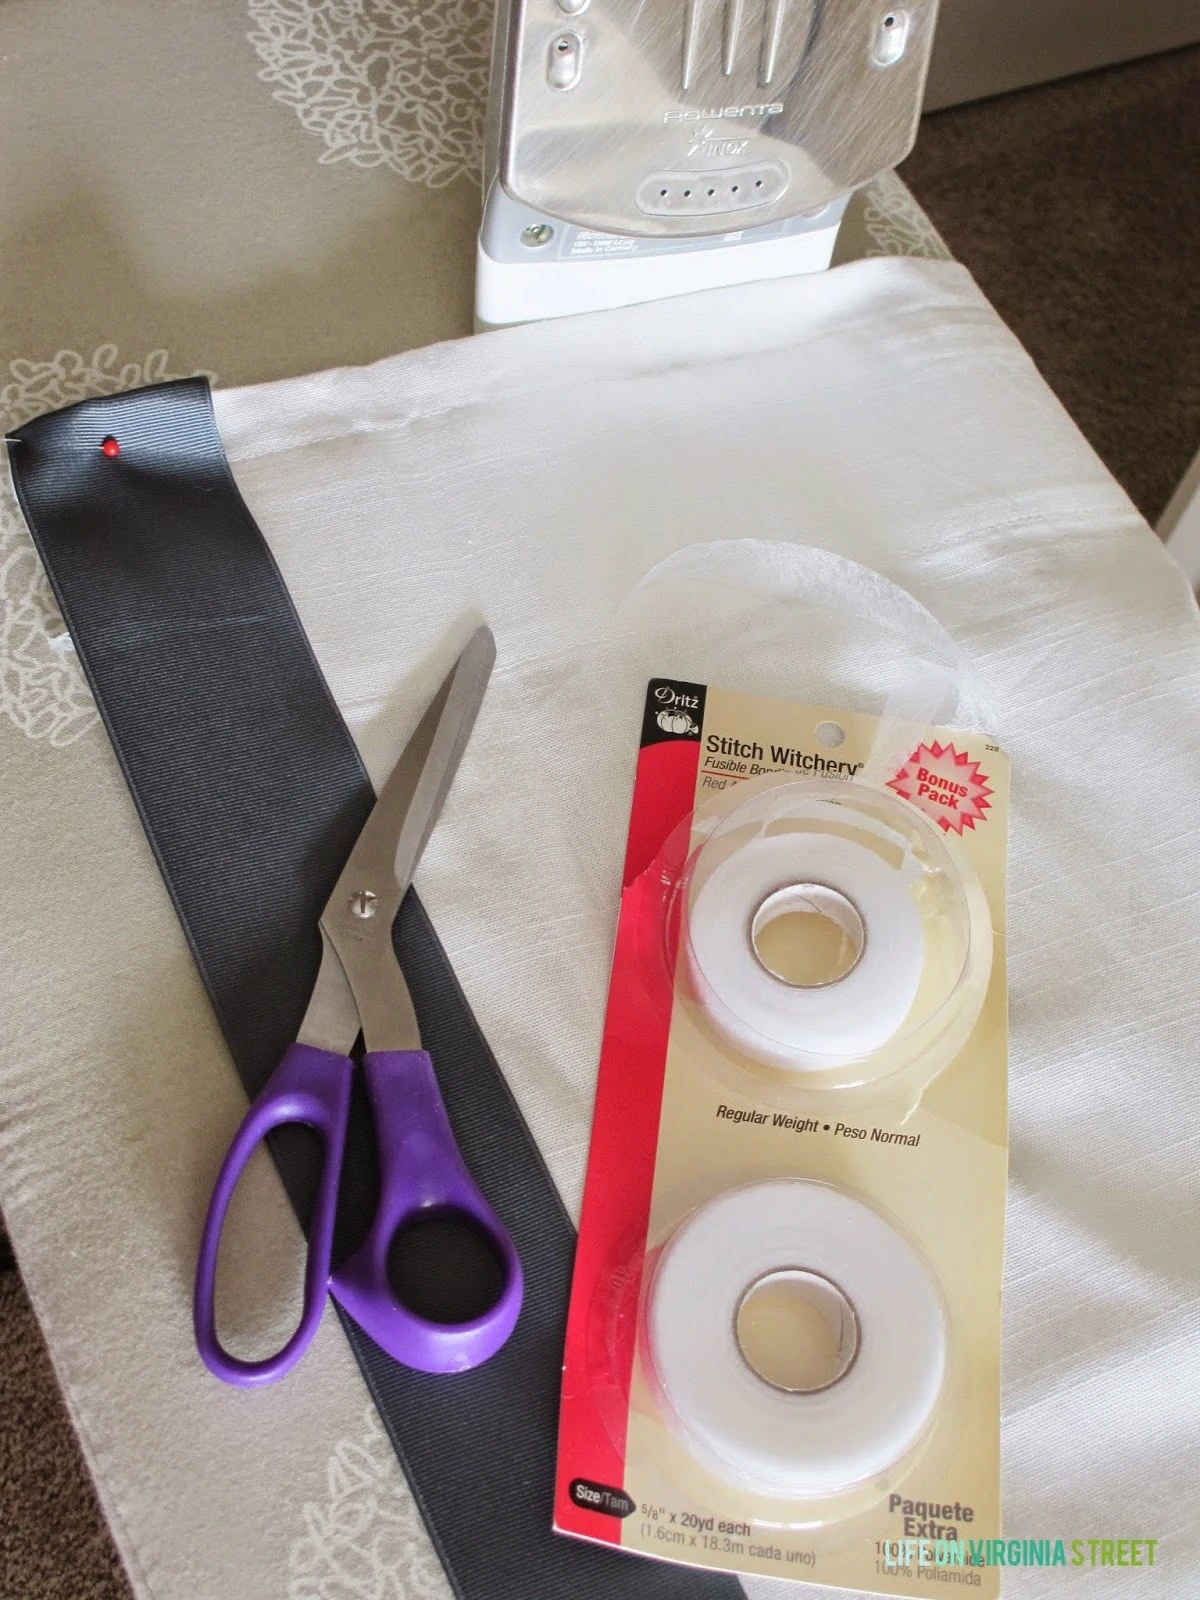 Fabric, scissors, stitch tape on the counter.